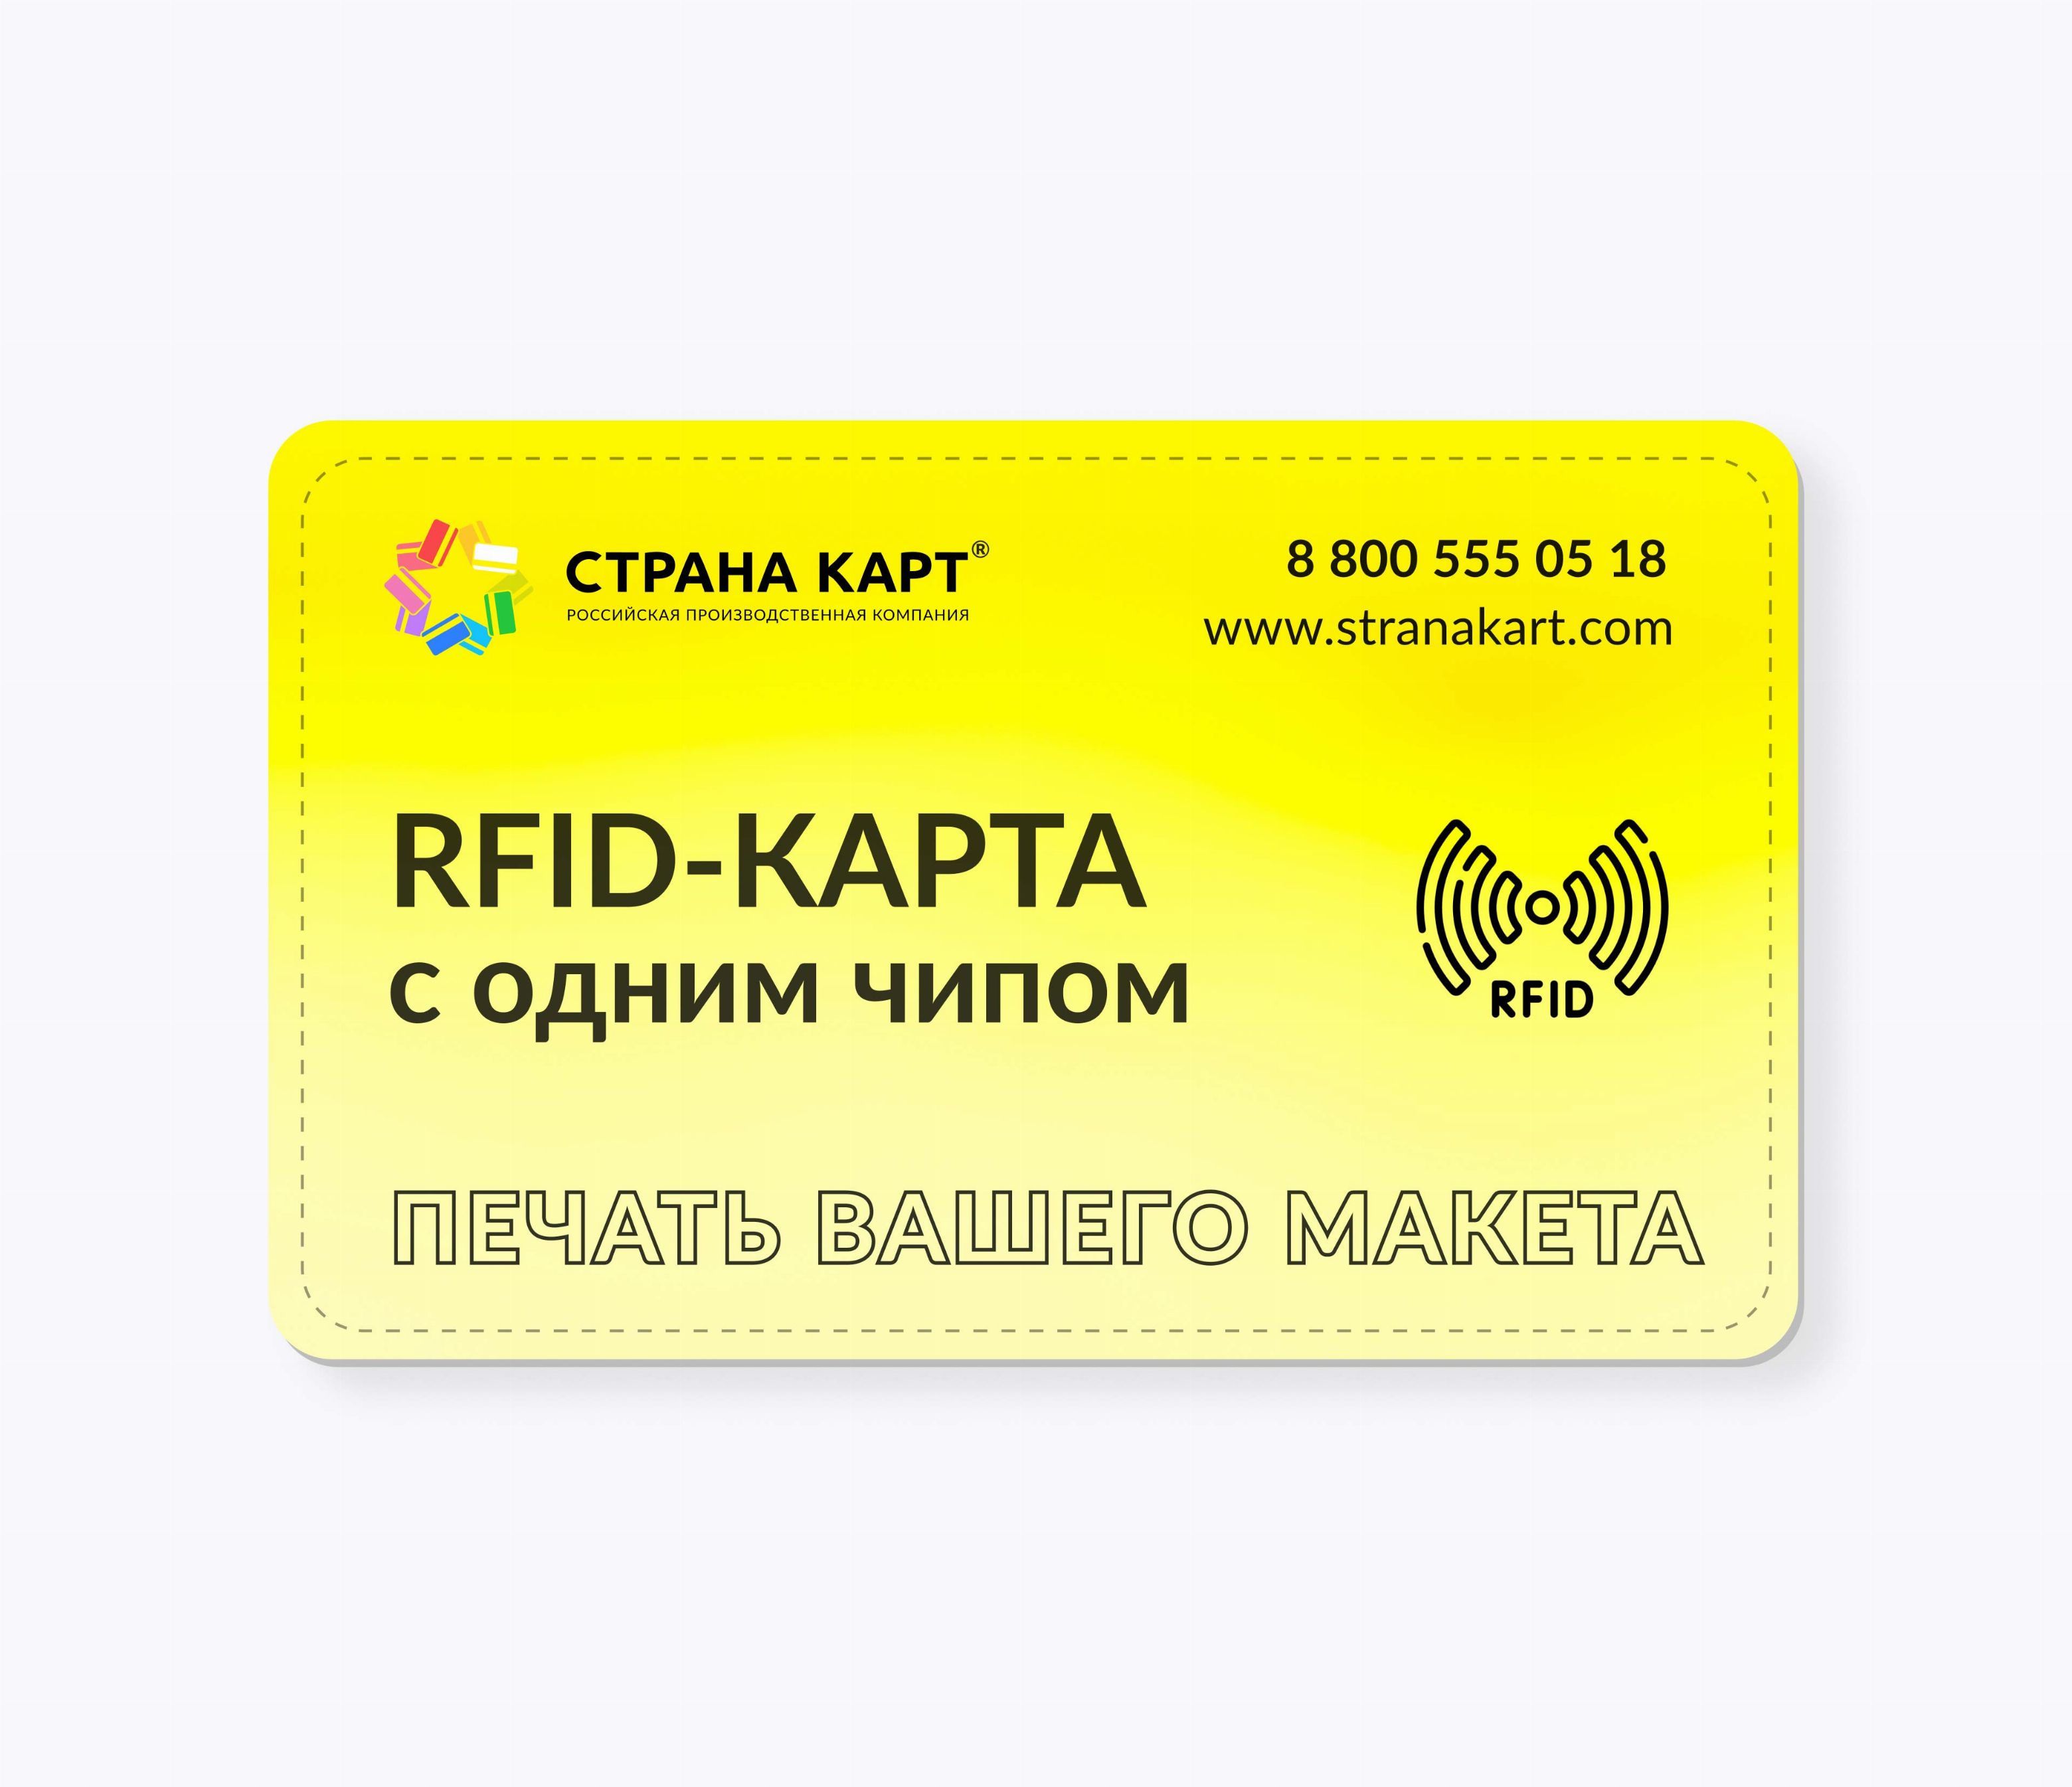 RFID-карты с чипом T5557, T5577 Temic ATMEL печать вашего макета RFID-карты Temic ATMEL с чипами T5557, T5577